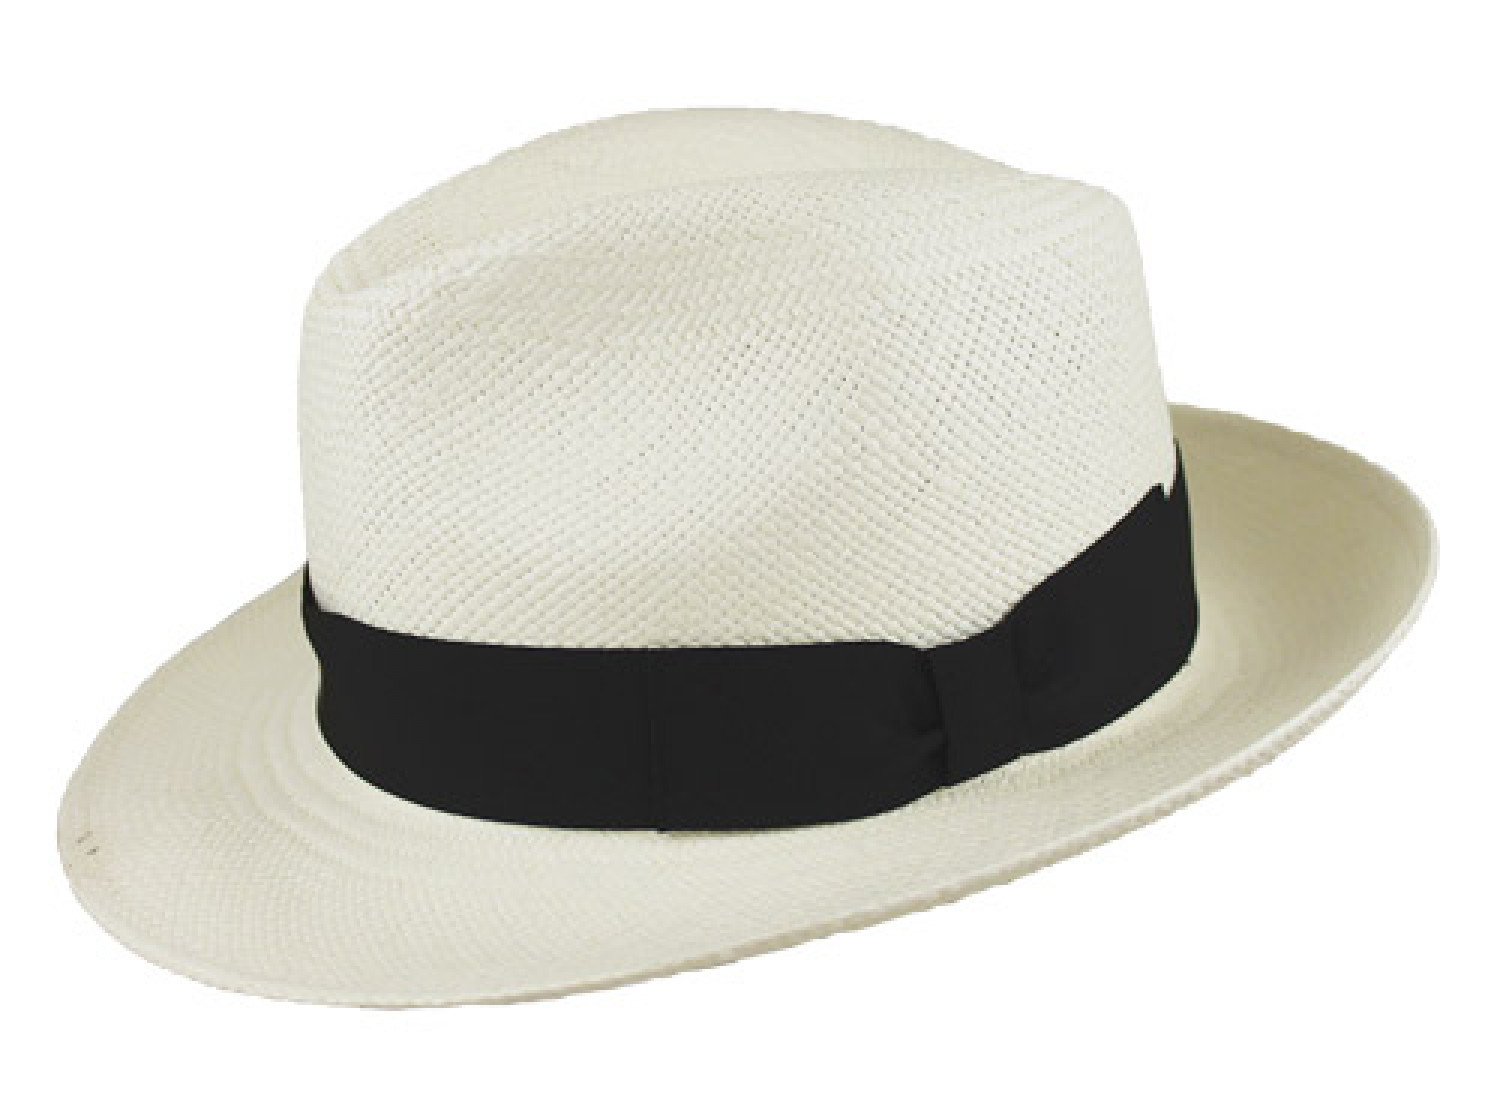 Panama Hat Fedora